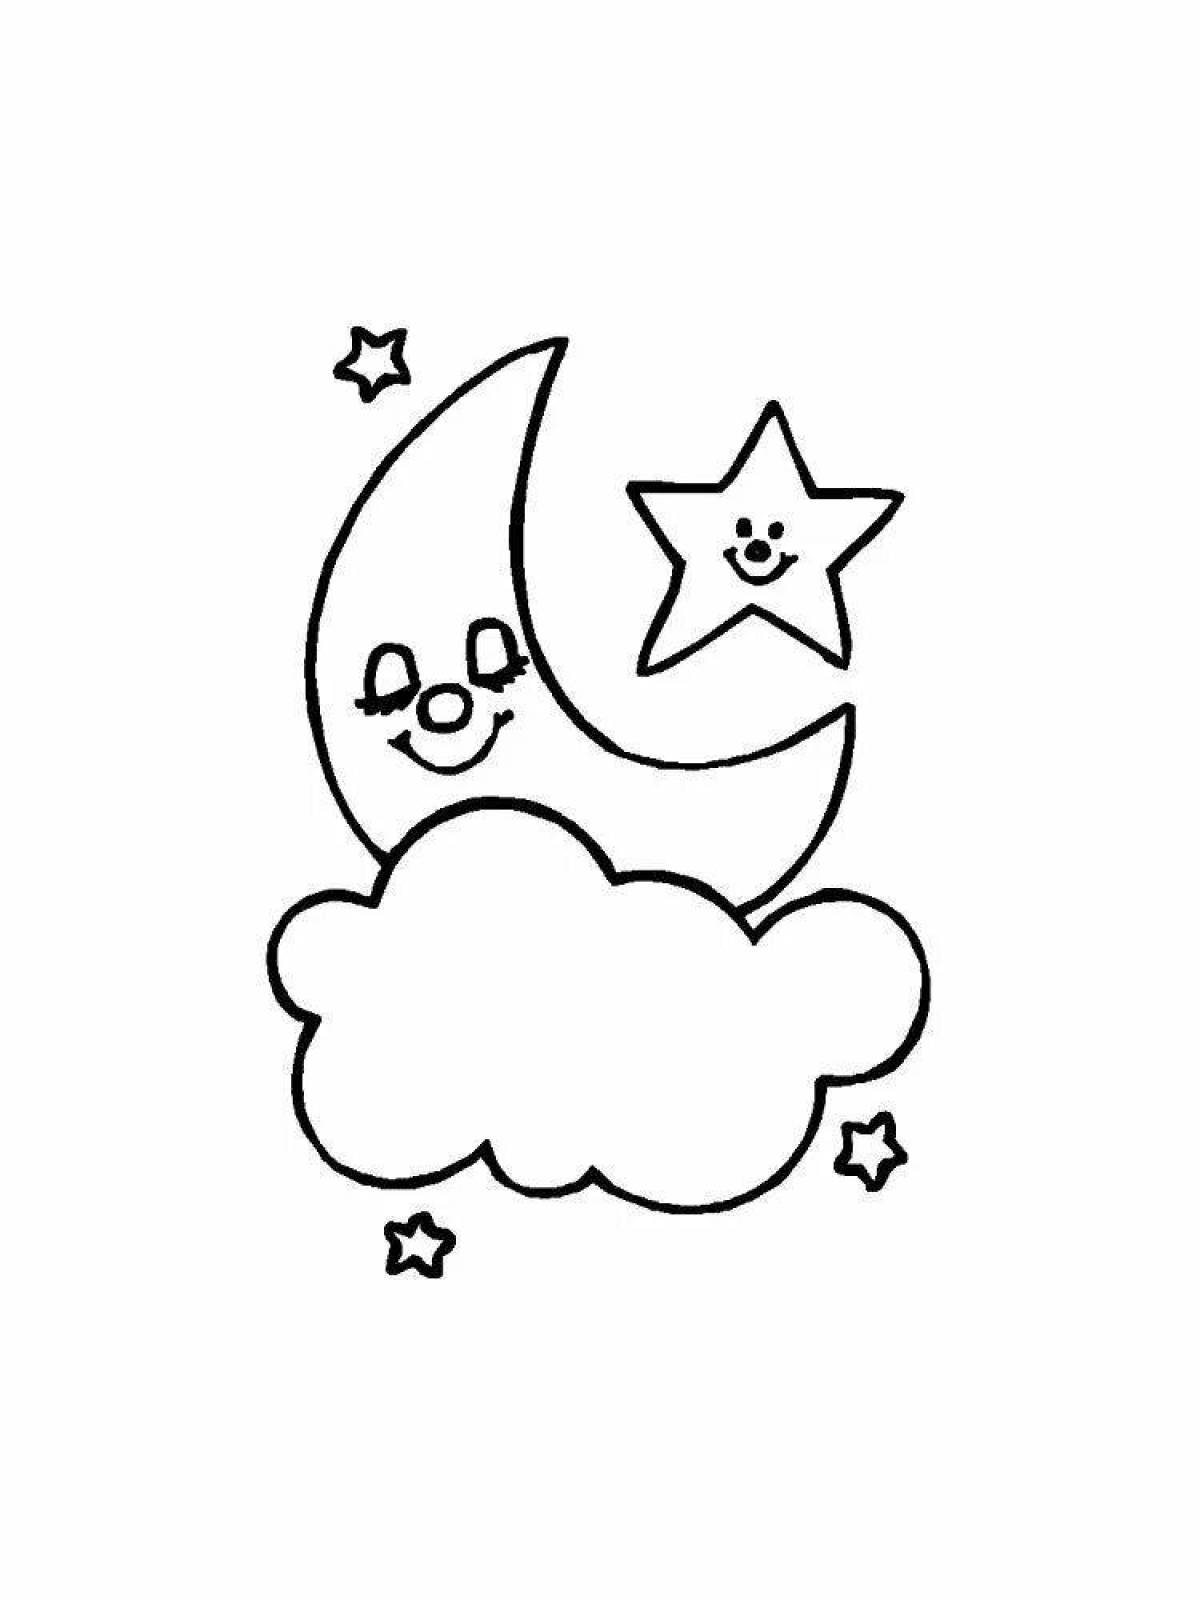 Moon and stars #7